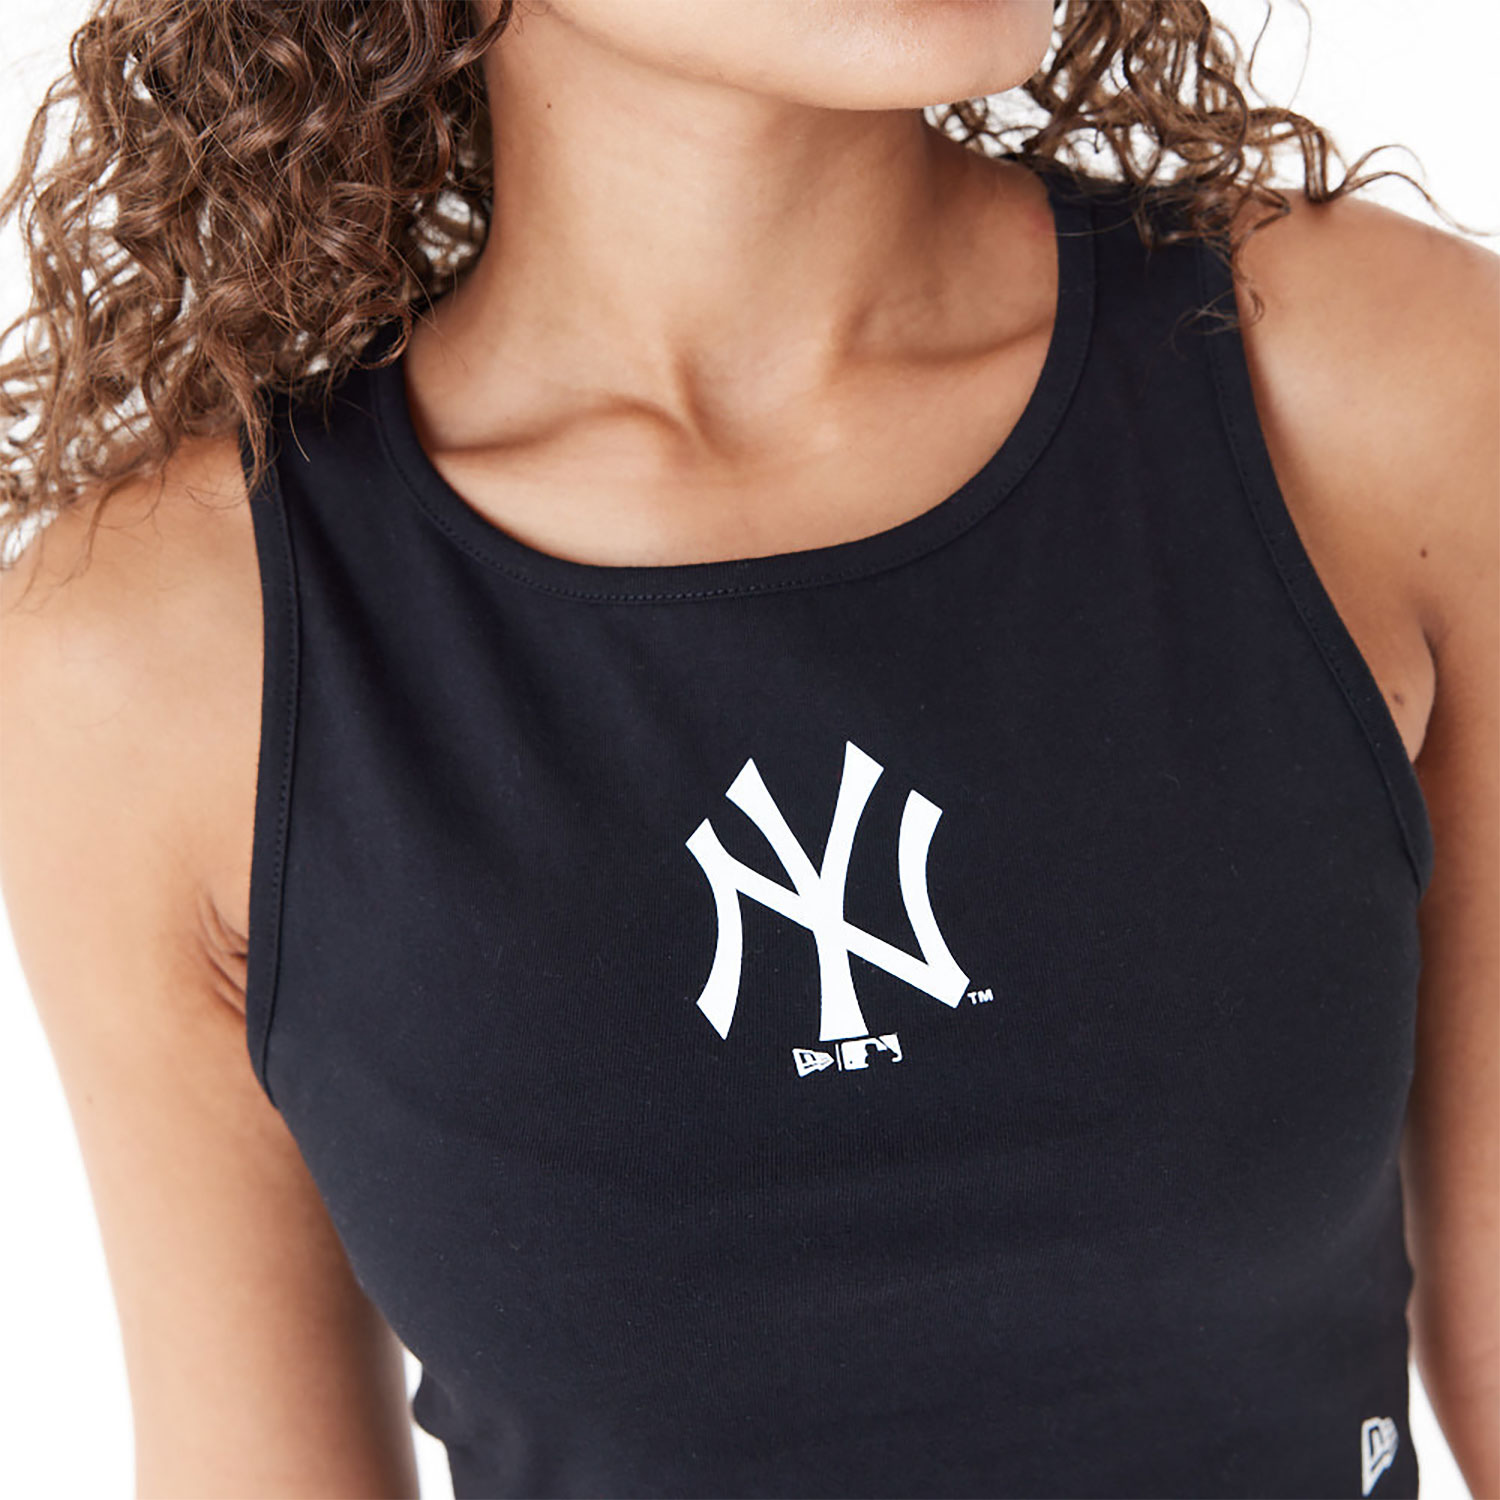 New York Yankees Womens MLB Lifestyle Black Crop Tank Top